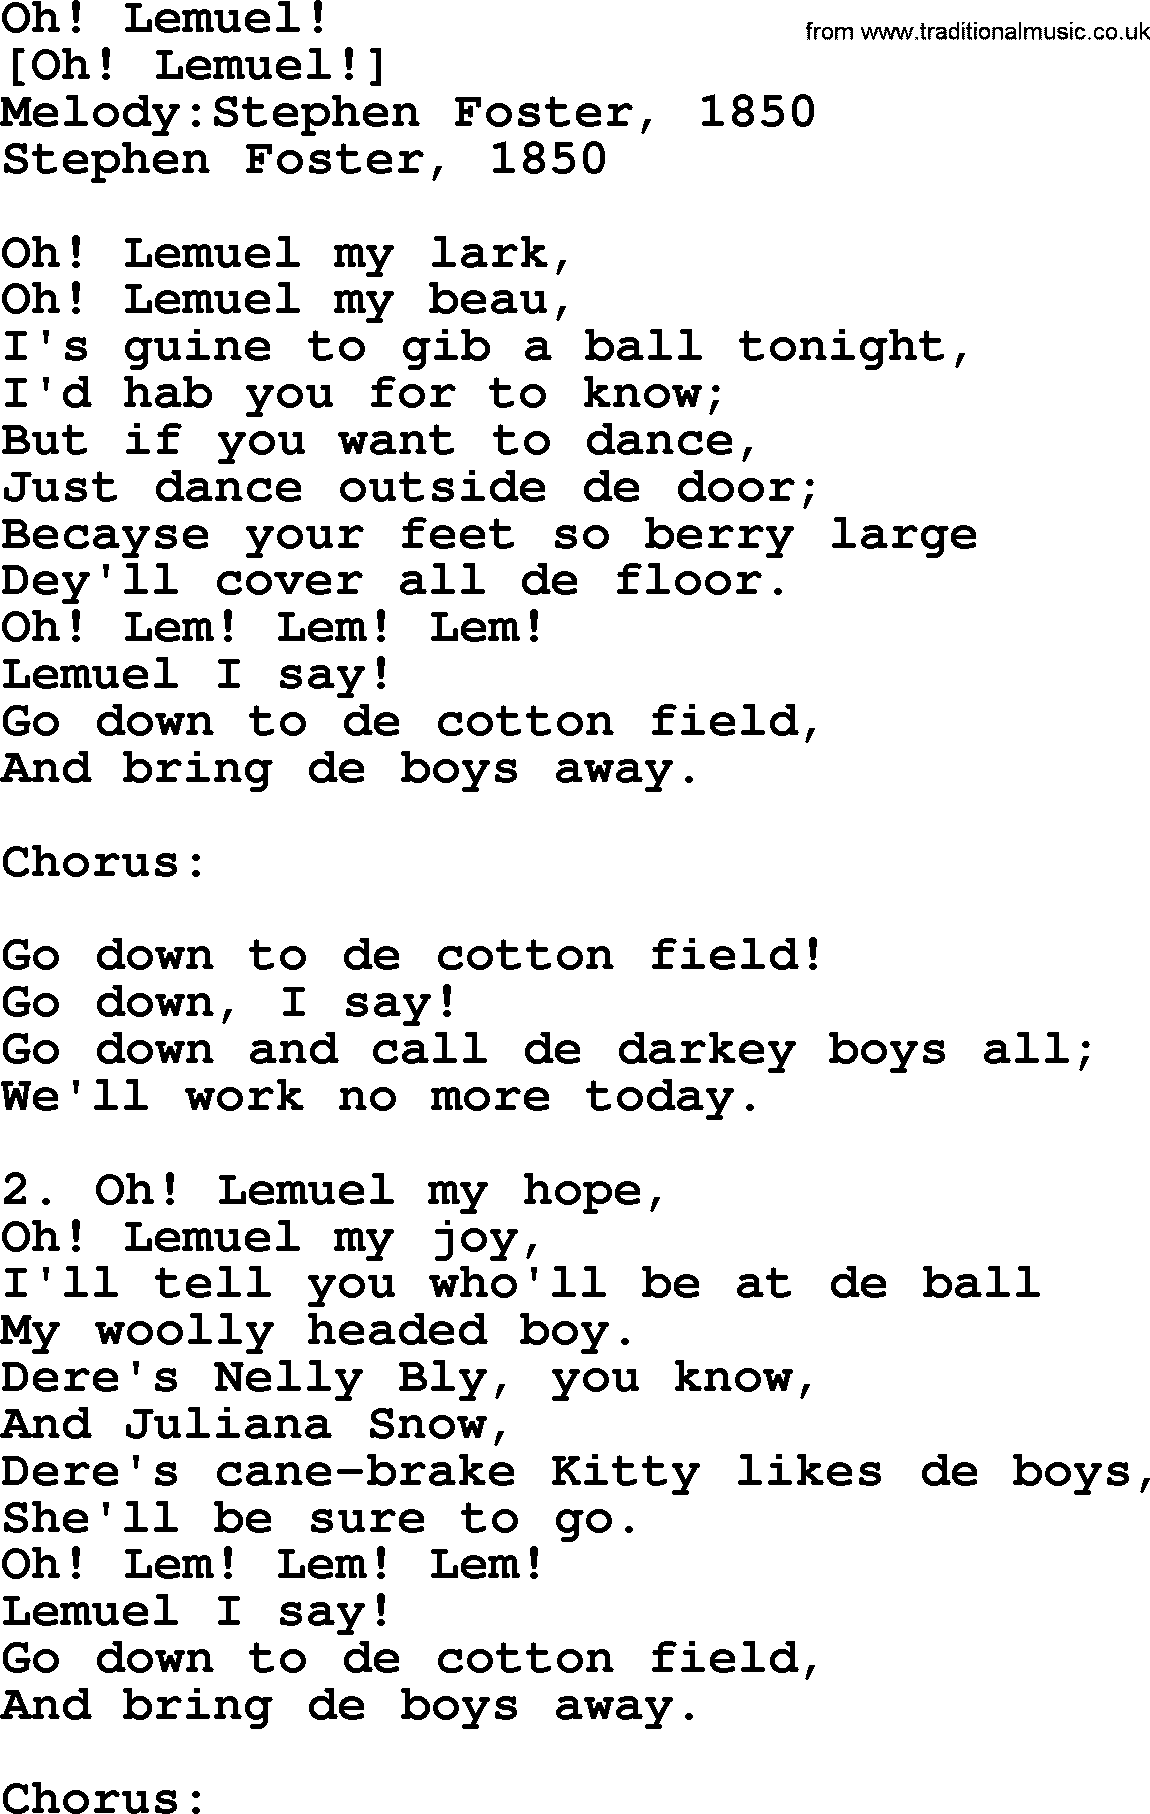 Old American Song: Oh! Lemuel!, lyrics